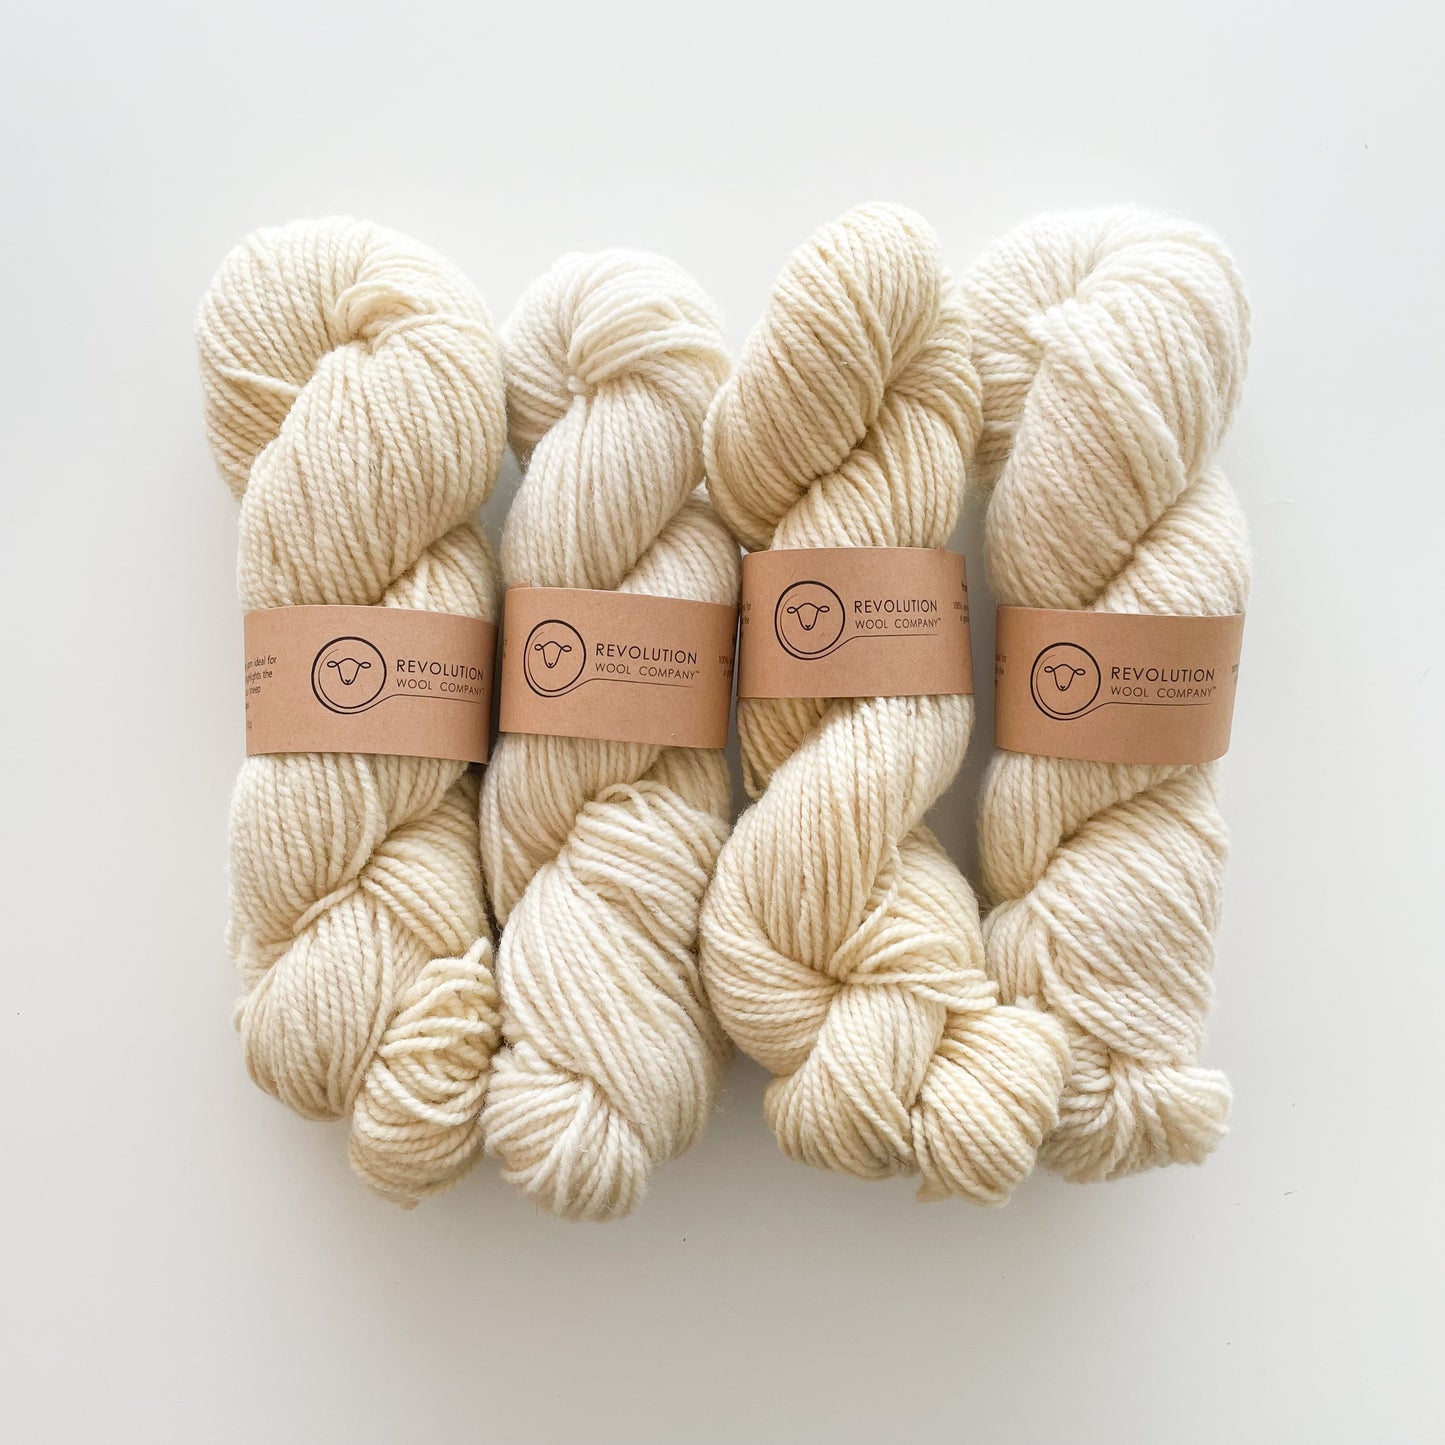 Undyed Natural Wool Yarn